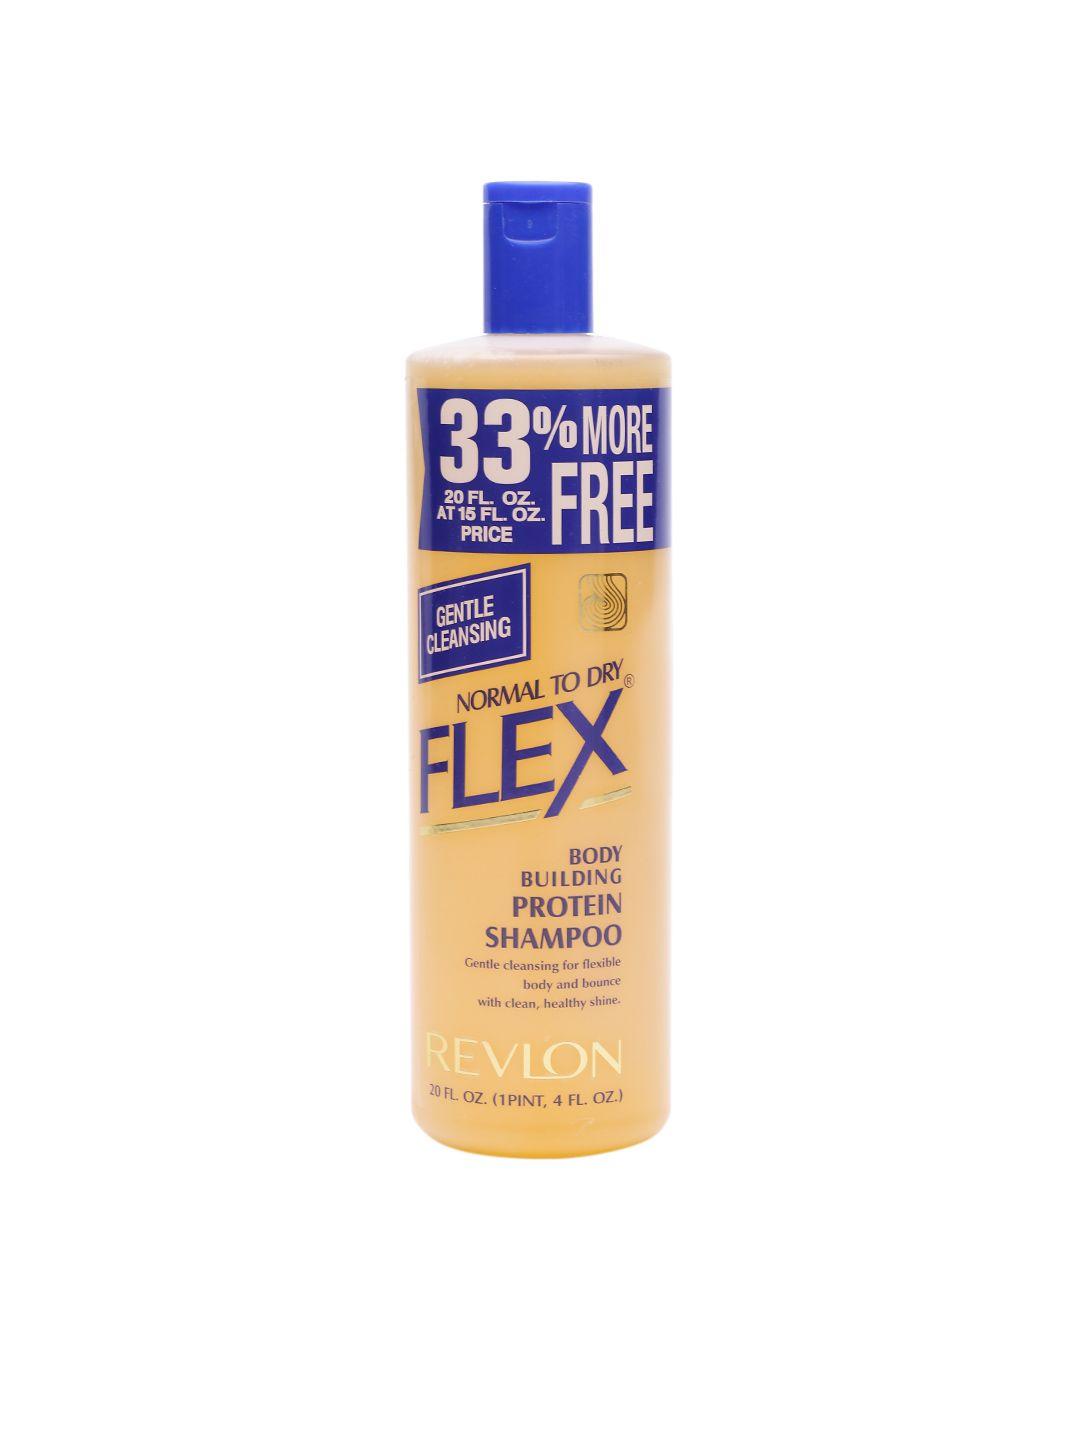 revlon flex body building protein shampoo 592 ml